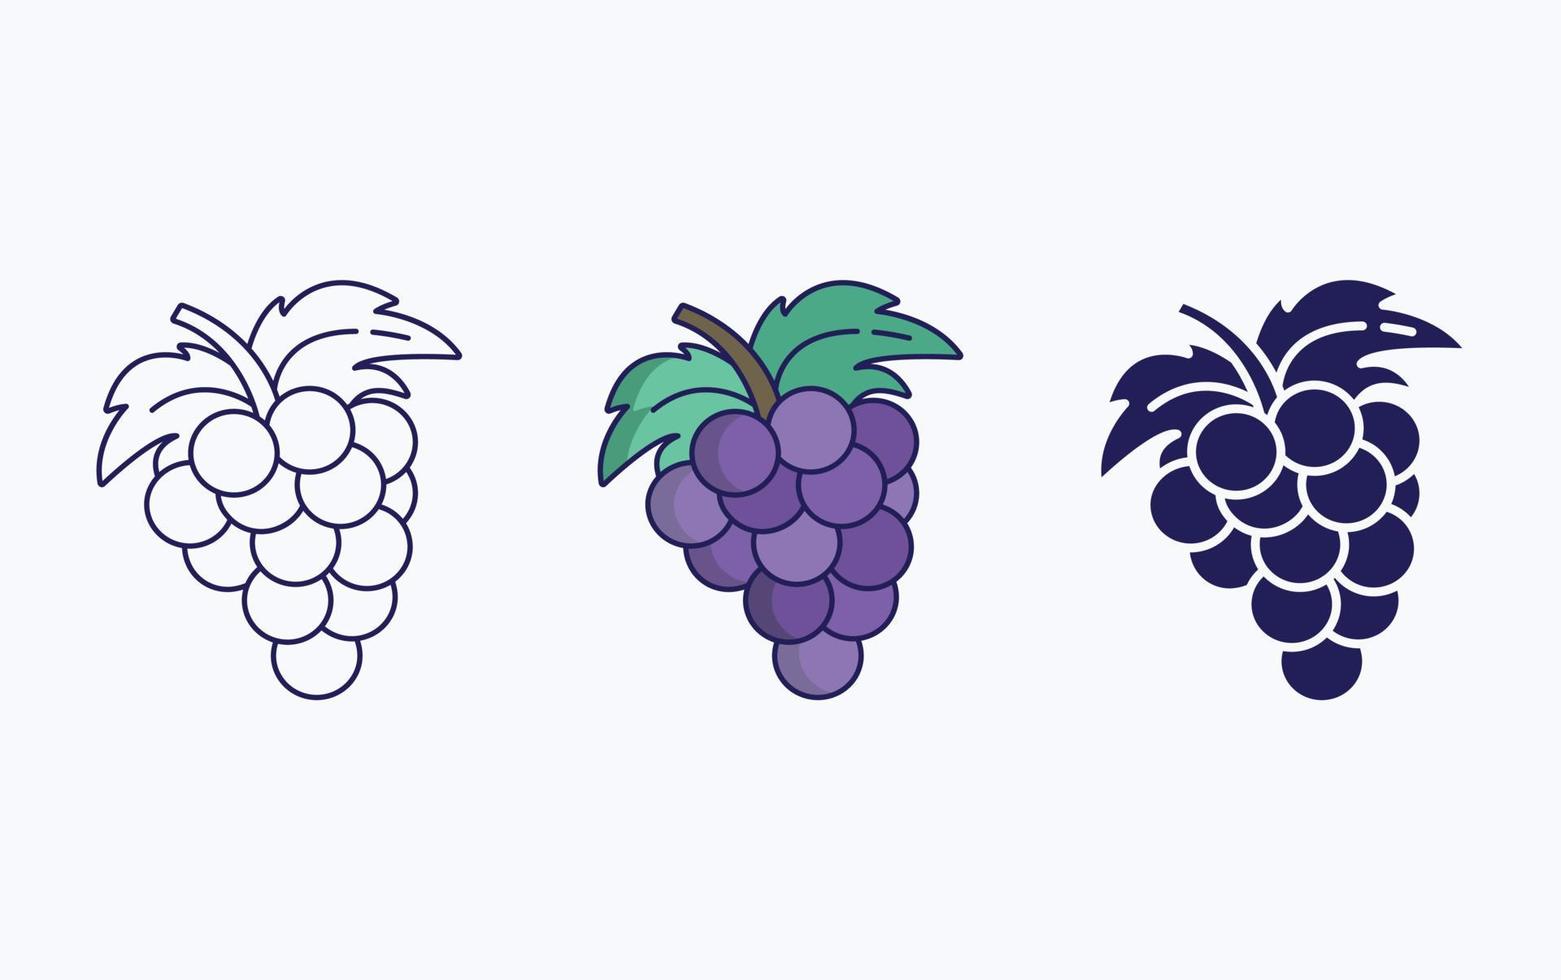 druiven vector pictogram illustratie